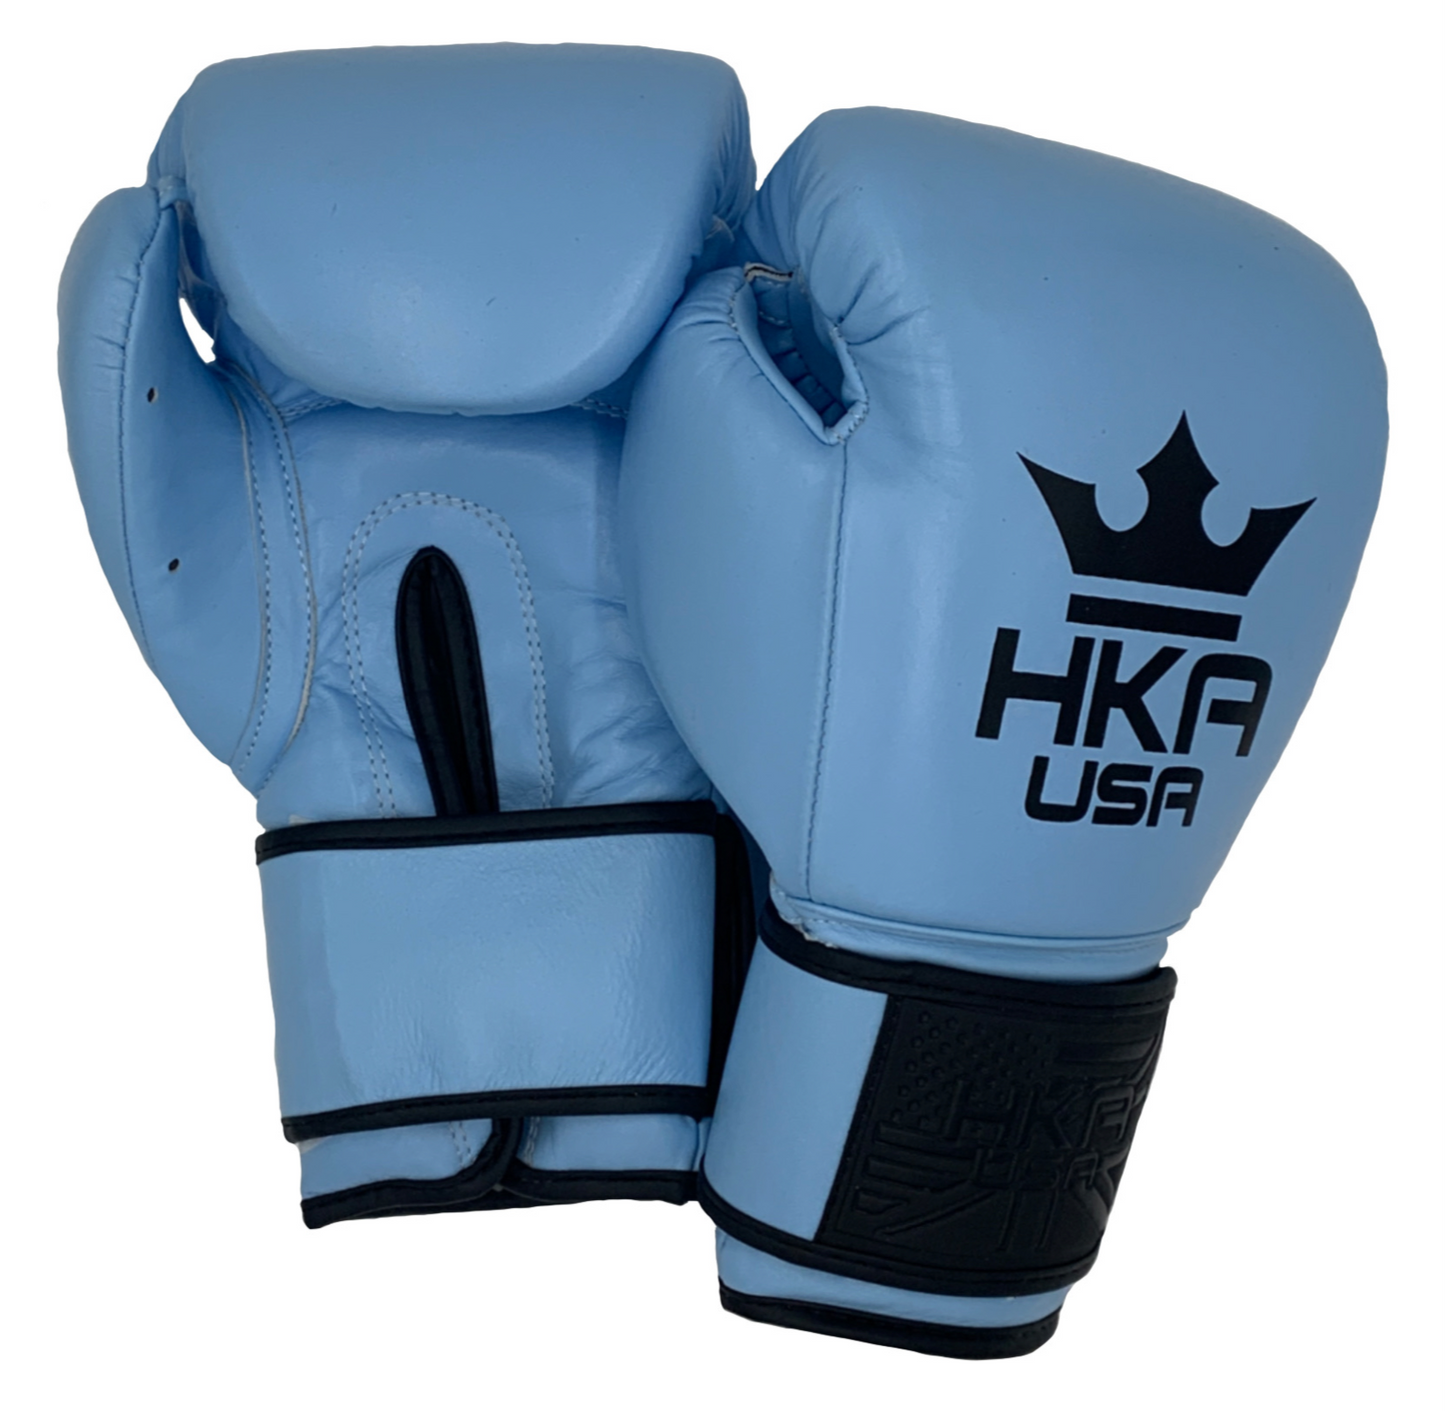 Boxing Gloves - SKY BLUE